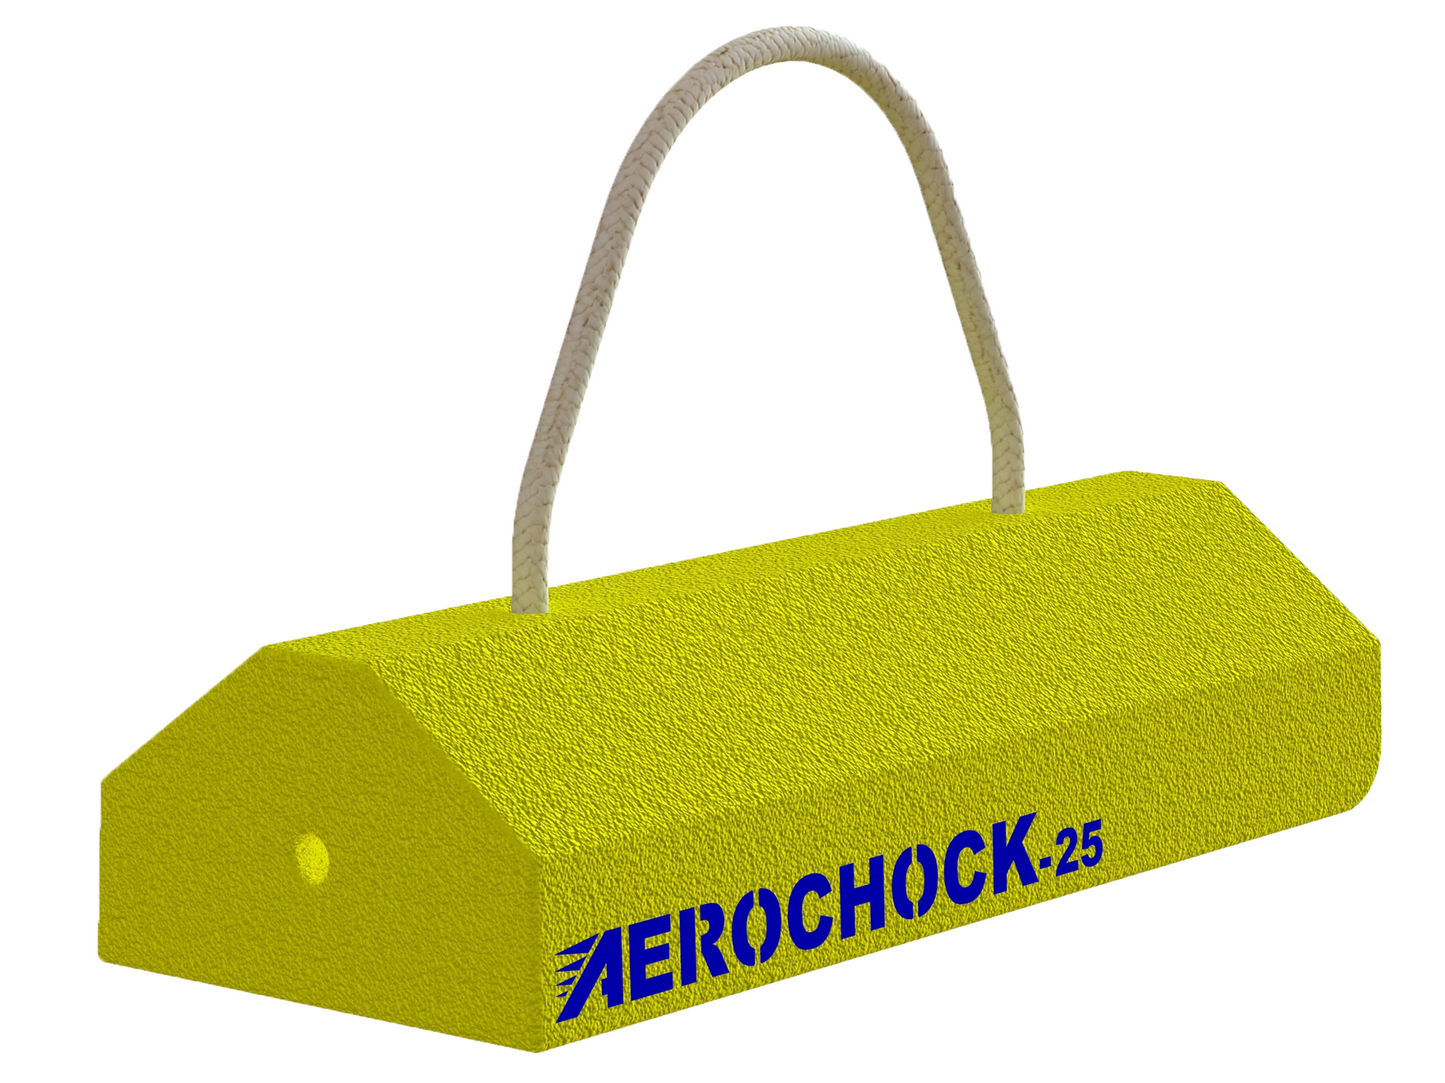 AeroChock™ size 25